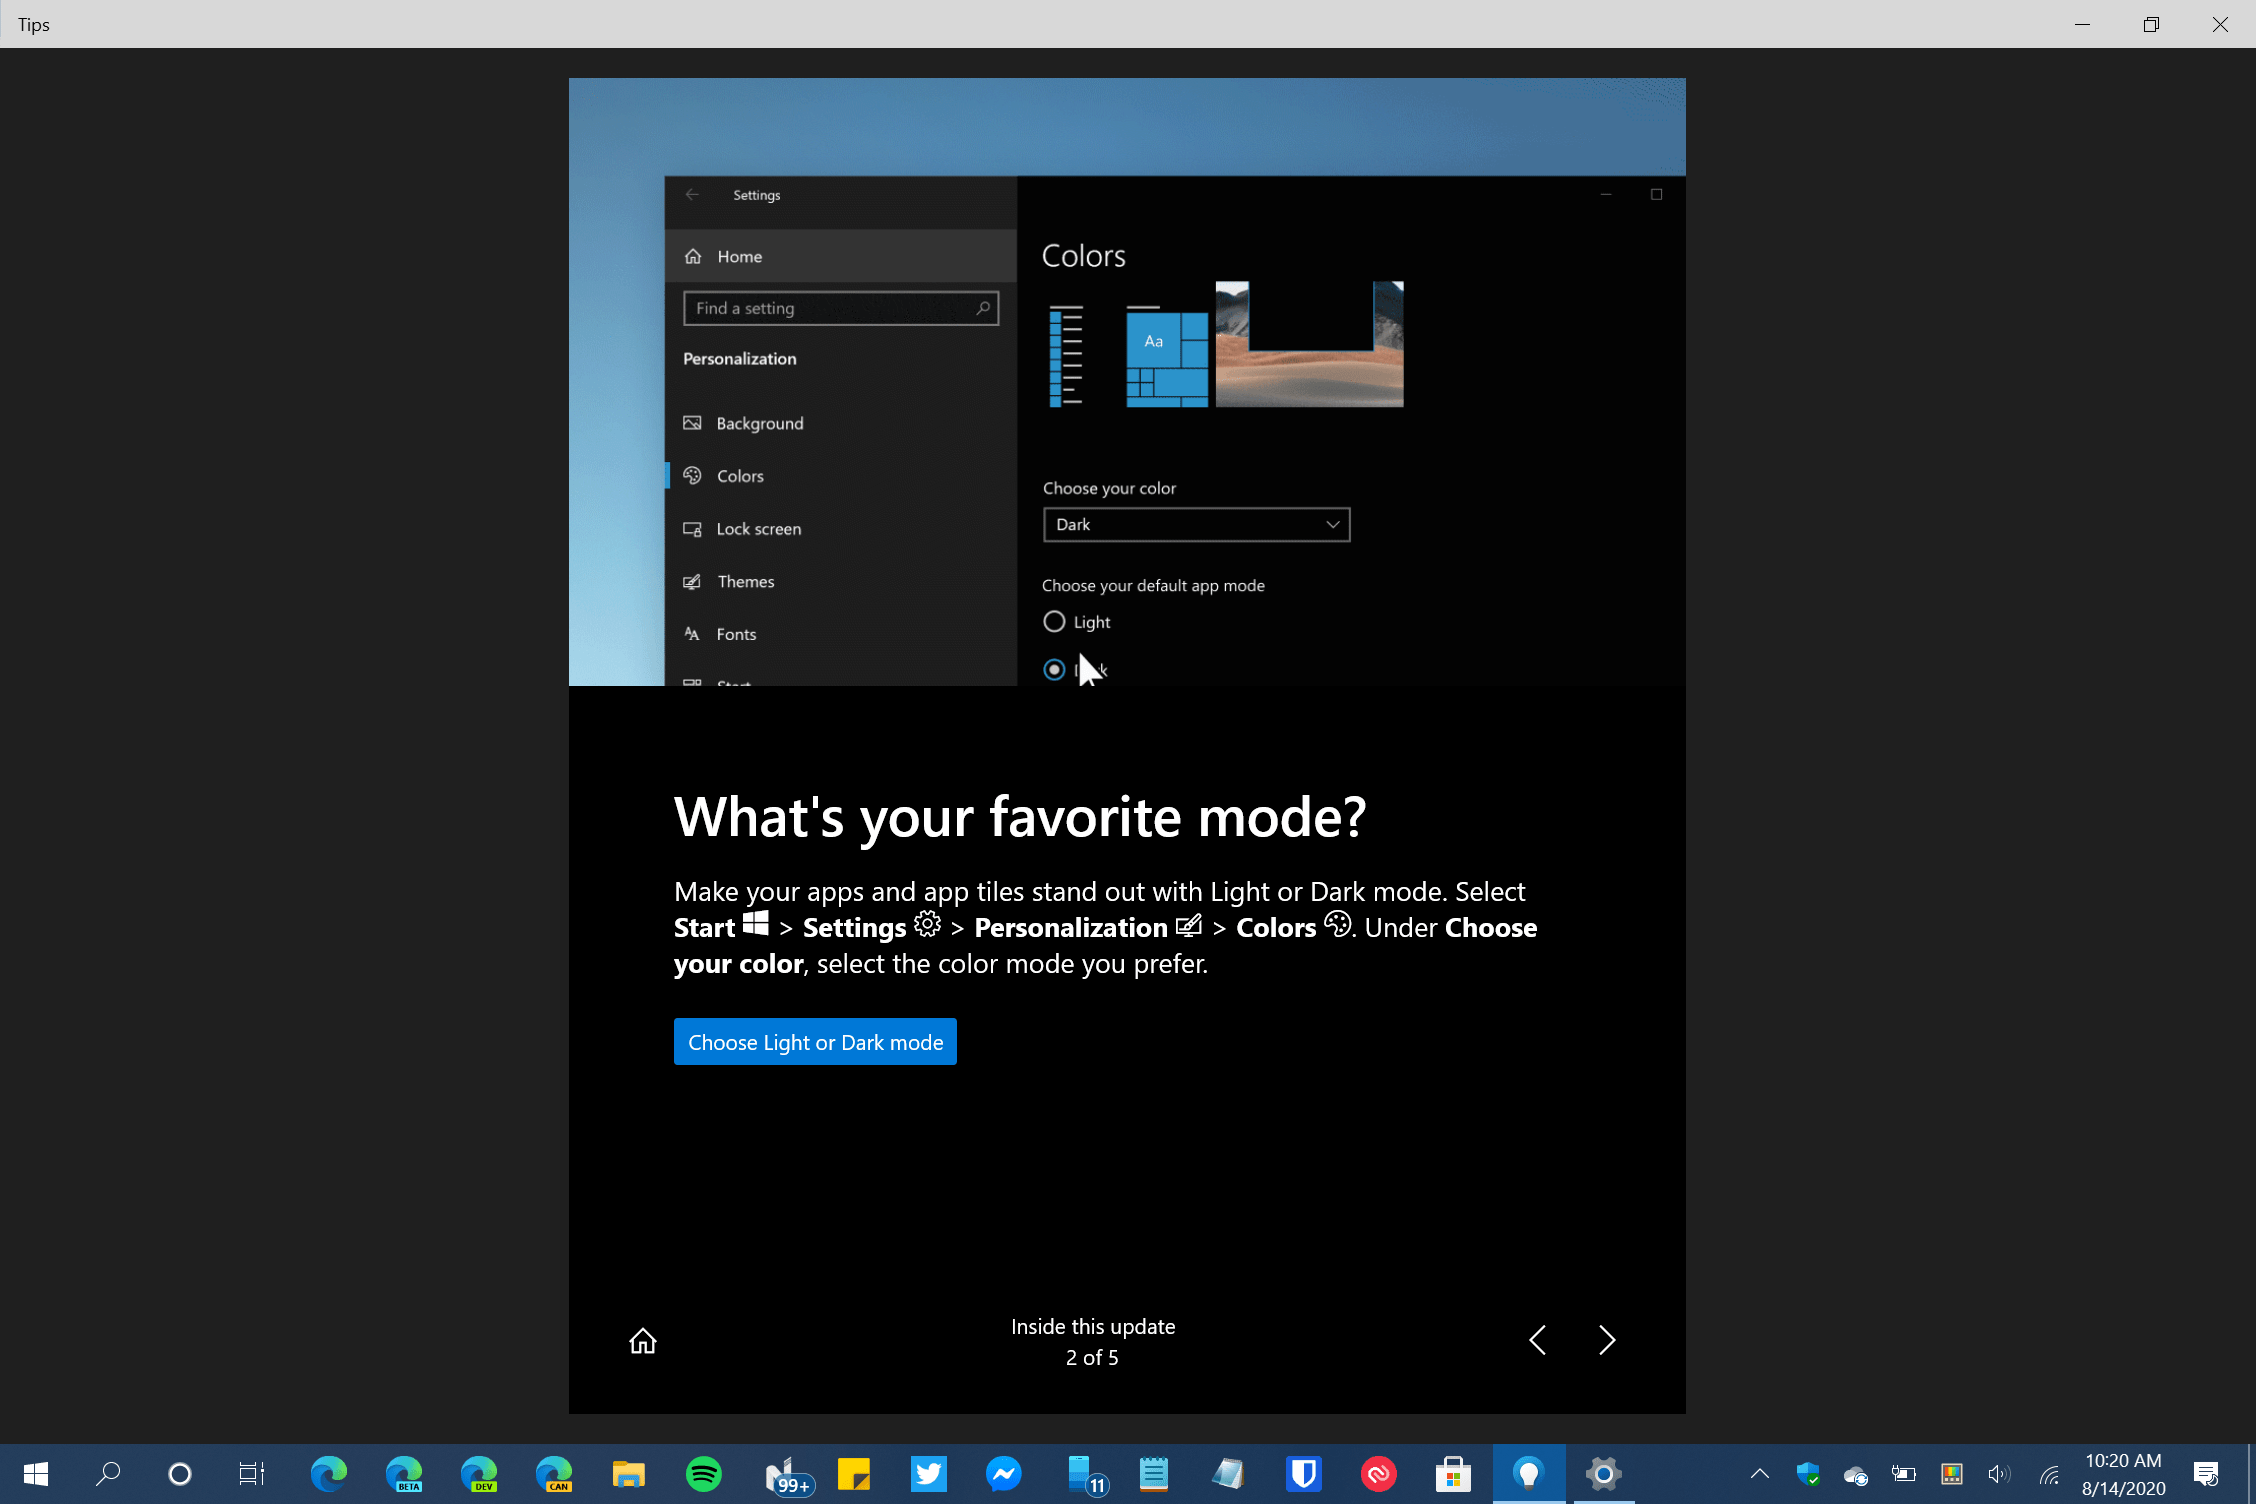 Windows 10 OOBE Update